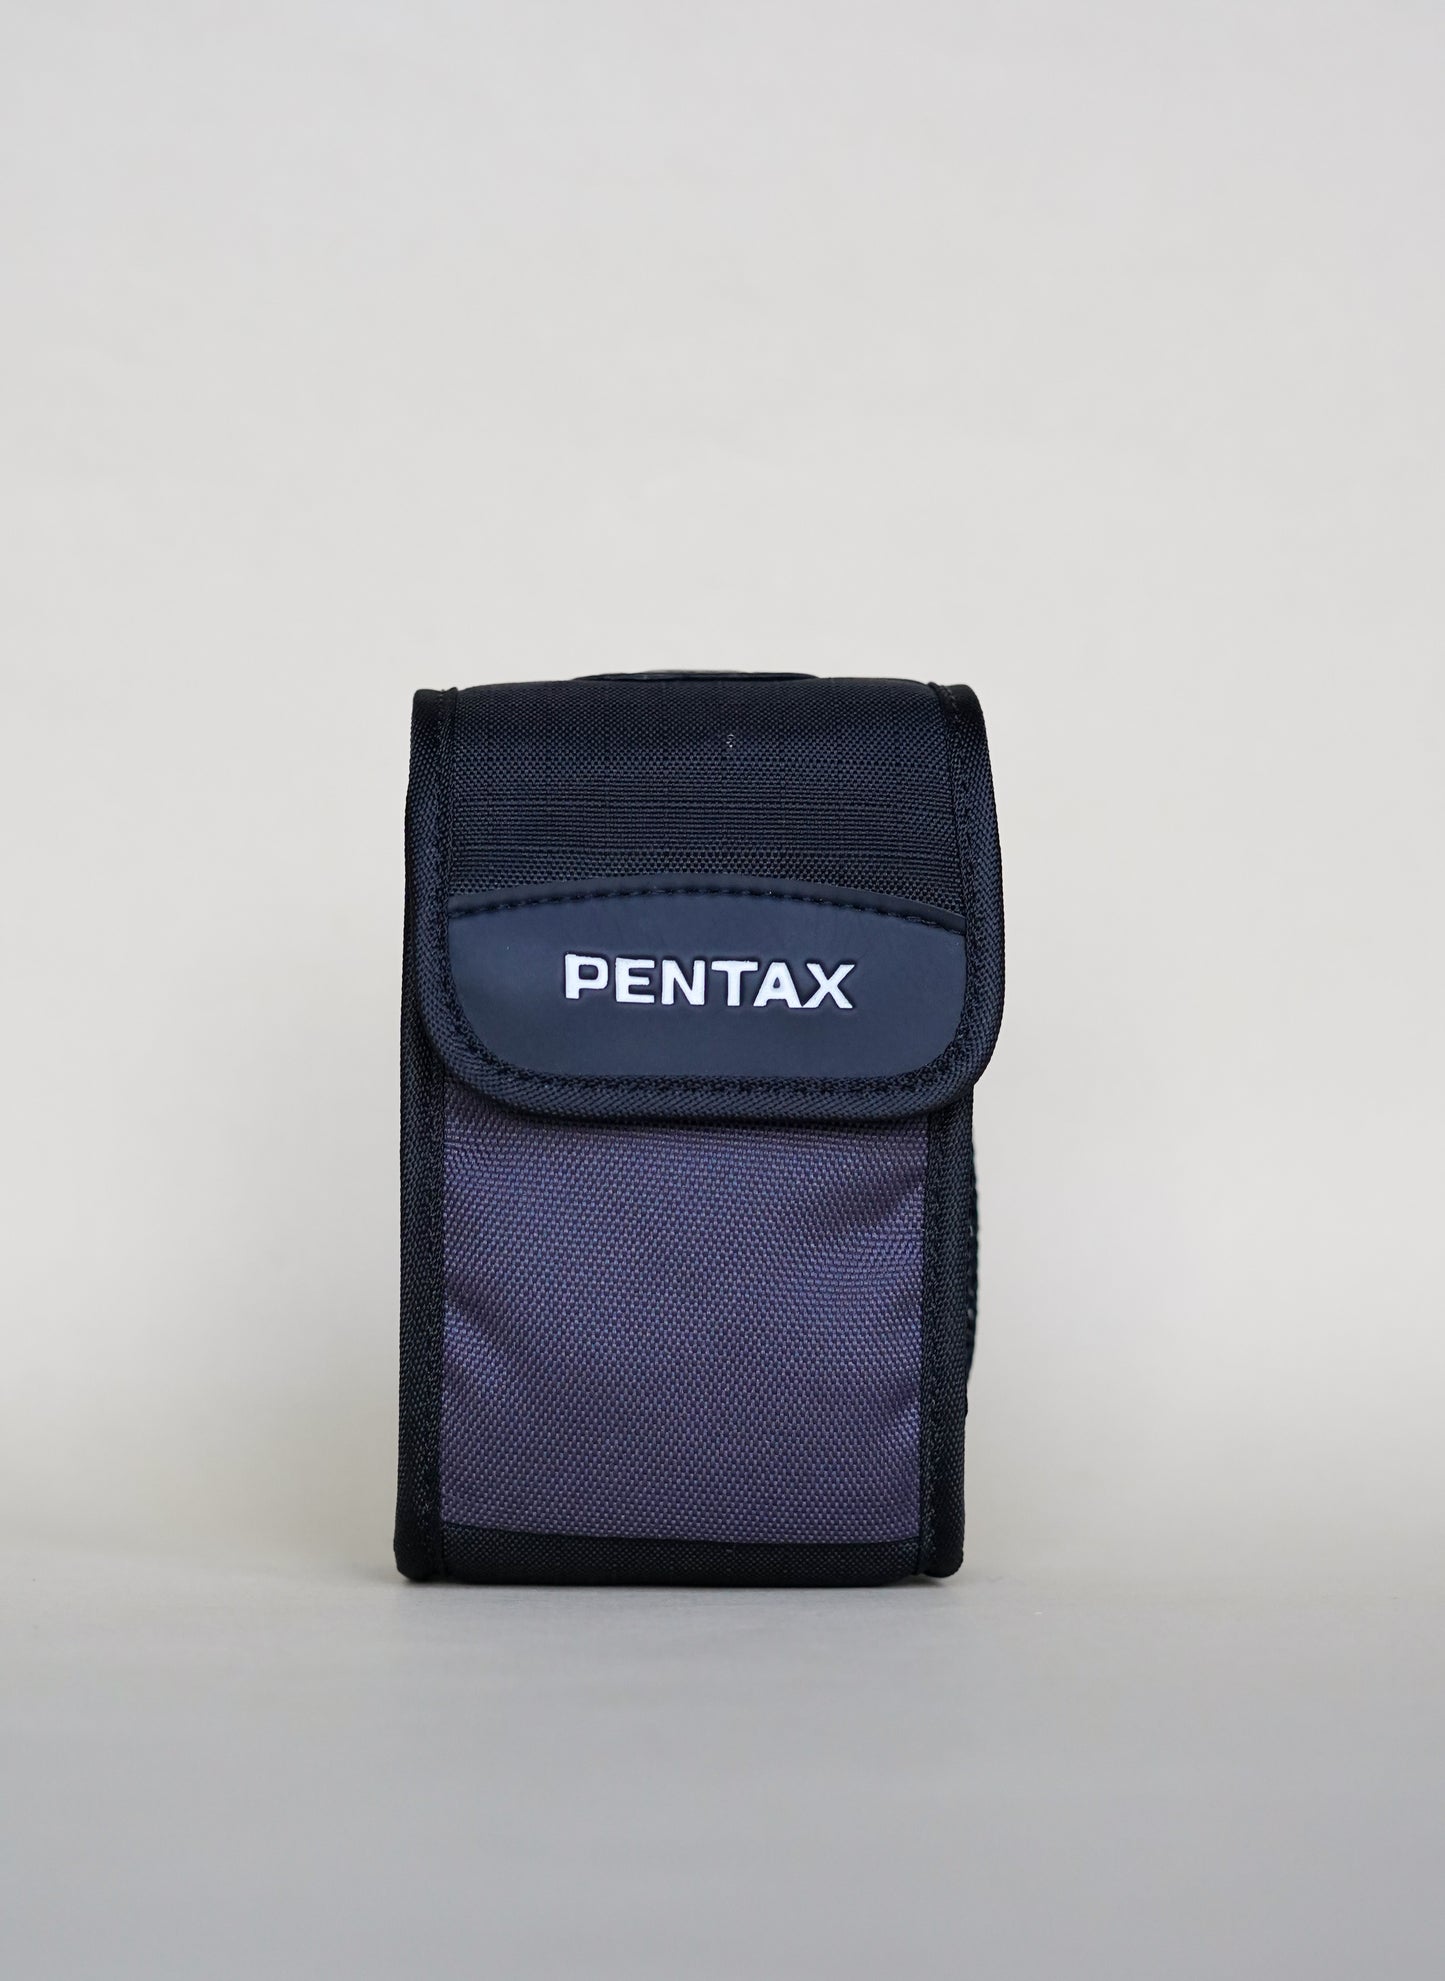 Pentax Medium